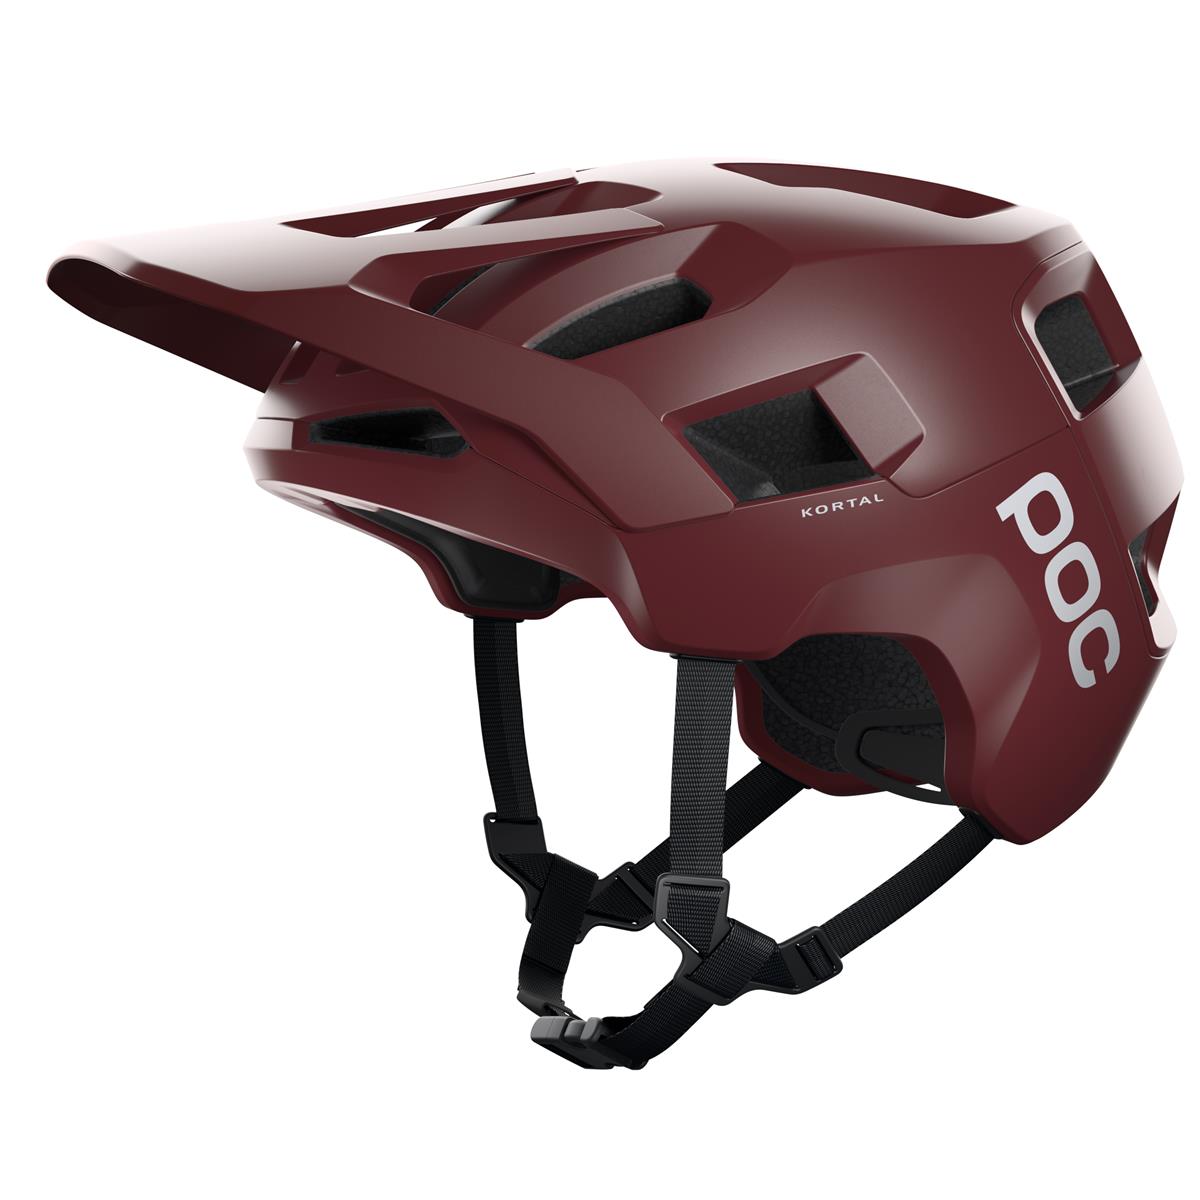 Helmet Kortal Propylene Red Matt size XS-S (51-54cm)